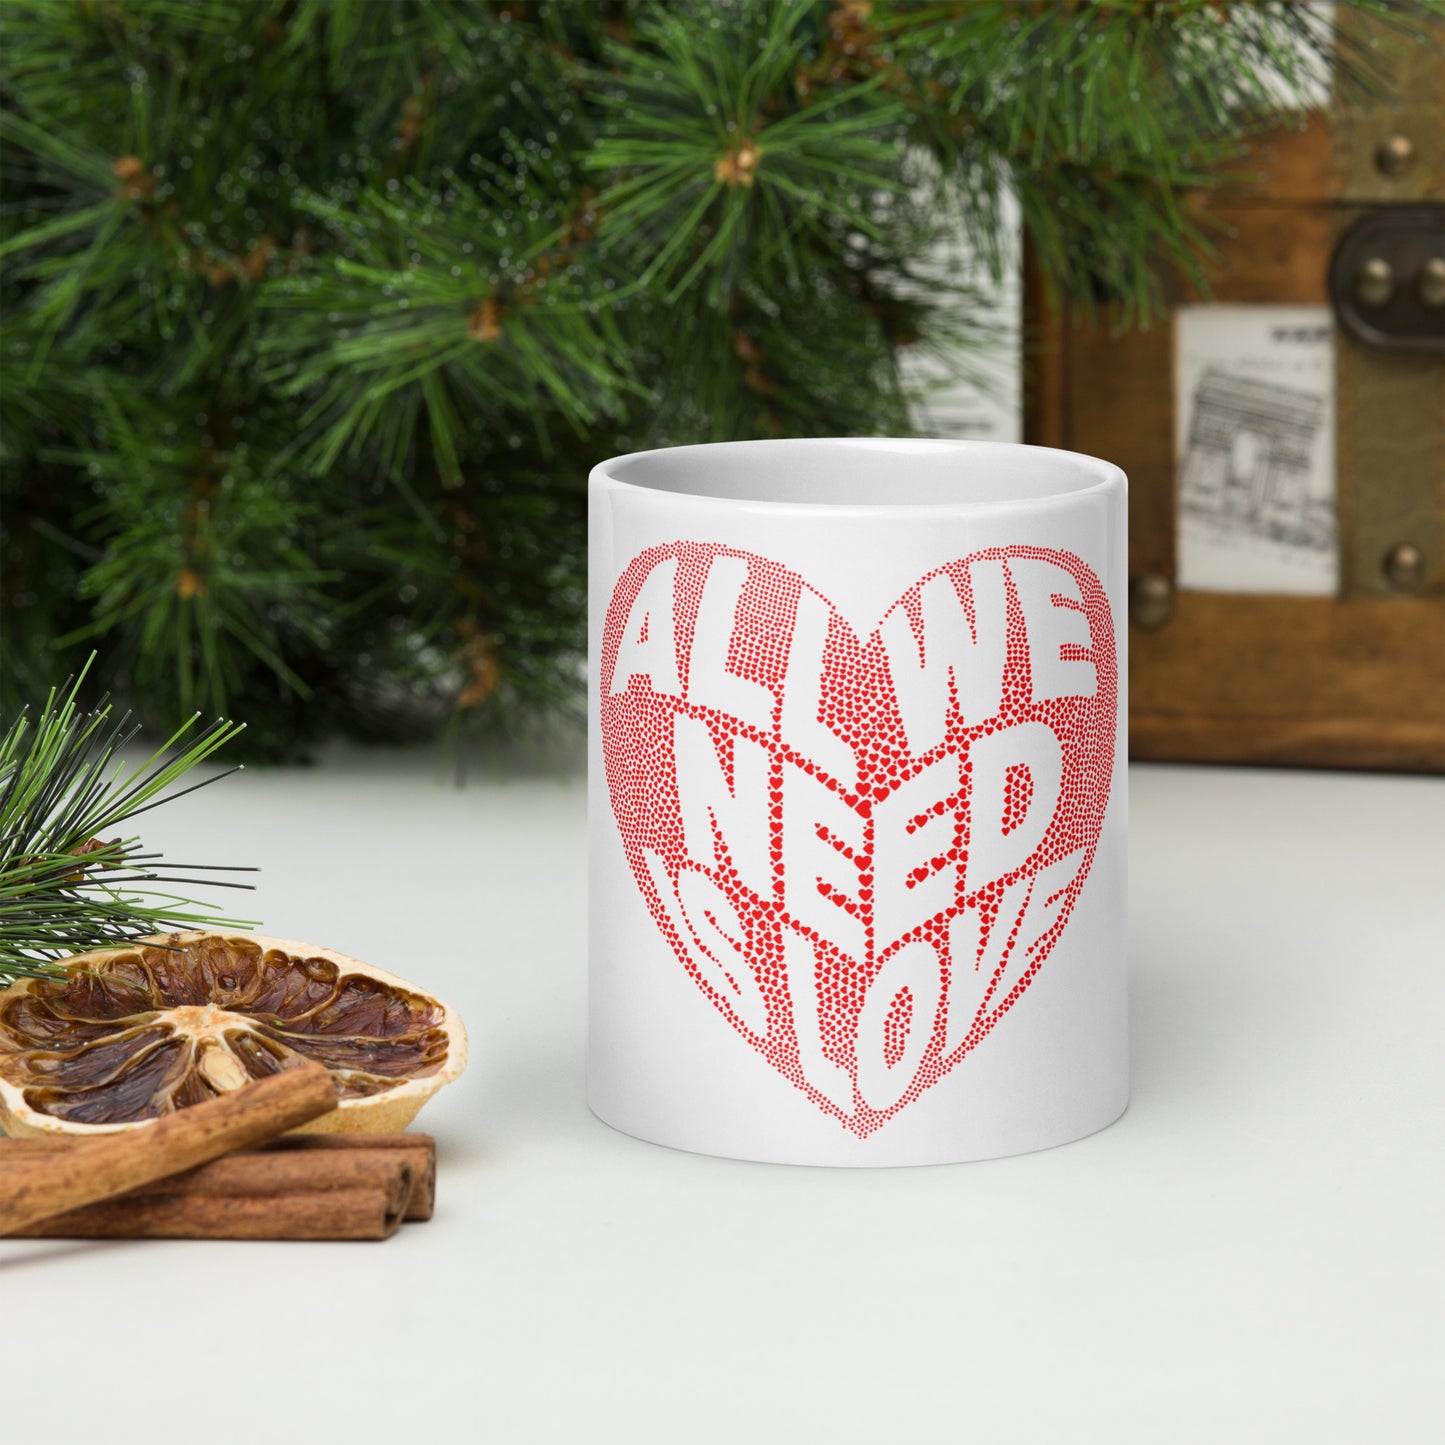 All We Need is Love Mug